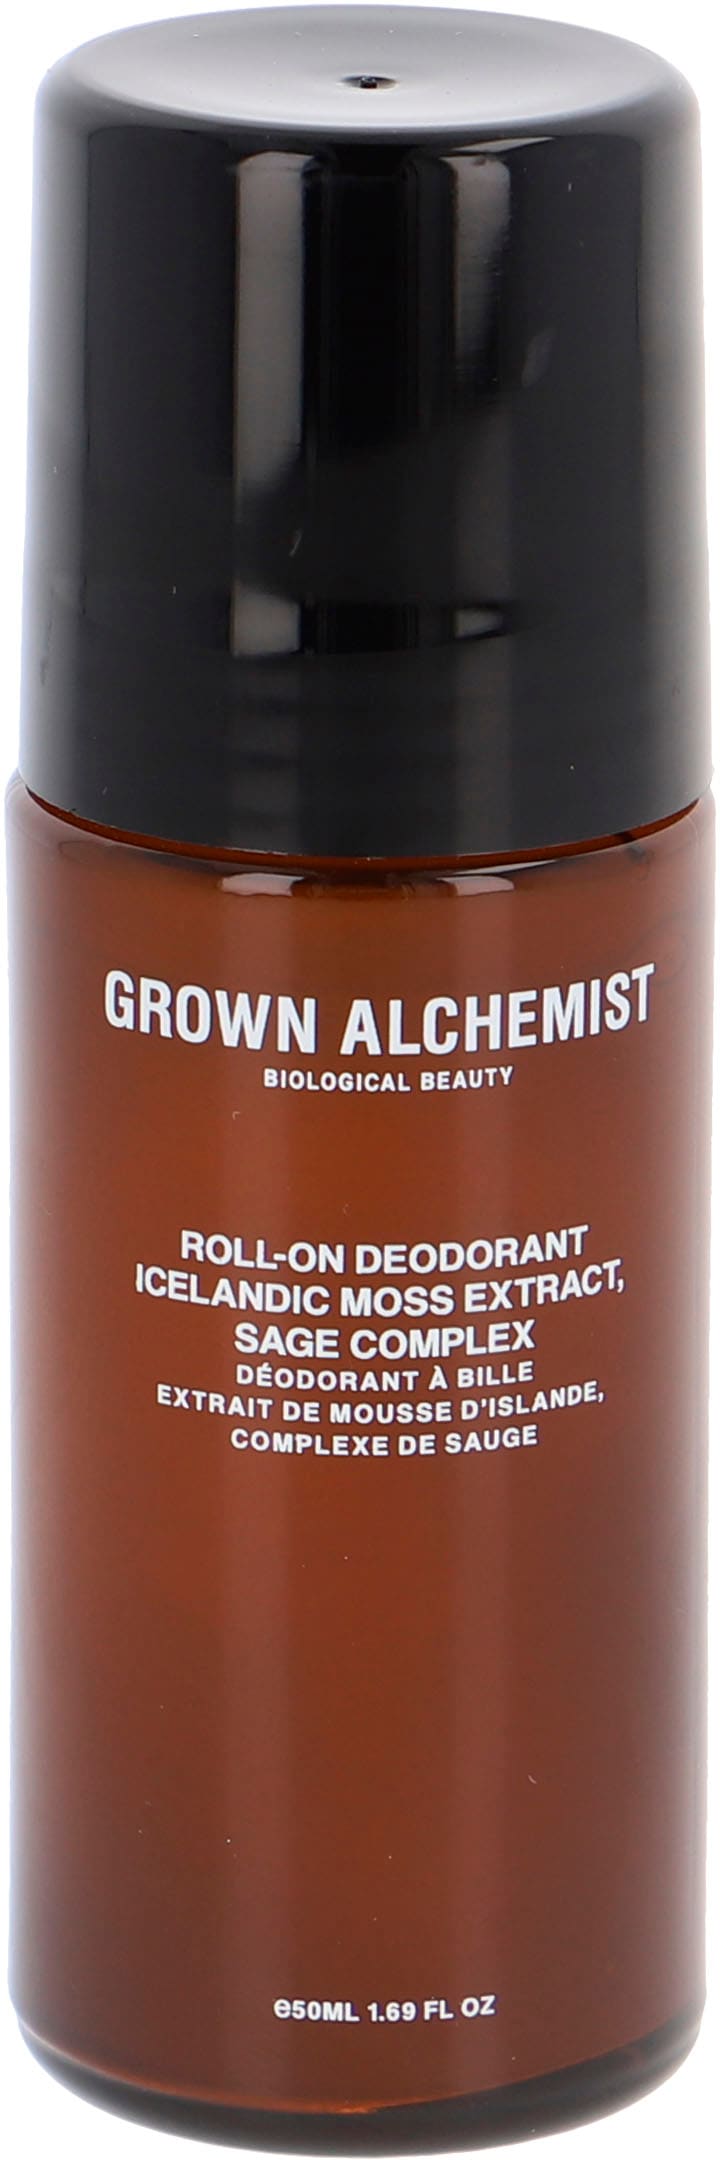 Moss Deodorant: Complex« | ALCHEMIST GROWN Deo-Roller »Roll-On Sage BAUR Extract, Icelandic